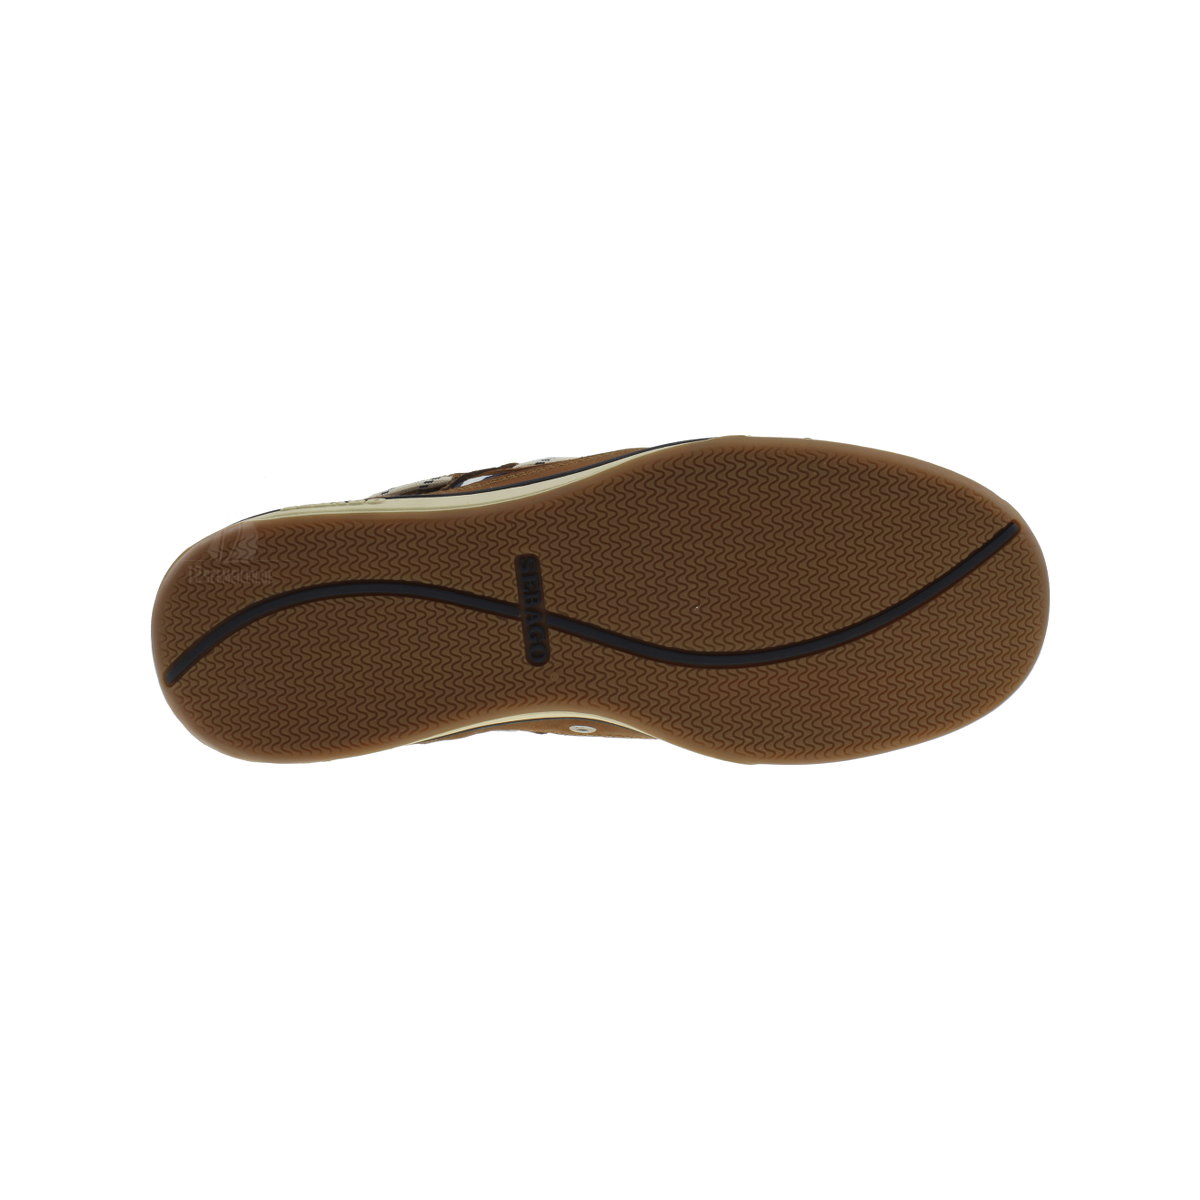 Sebago Triton Three-Eye bootschoen heren british tan/brown leather eu 47 (us 12,5)